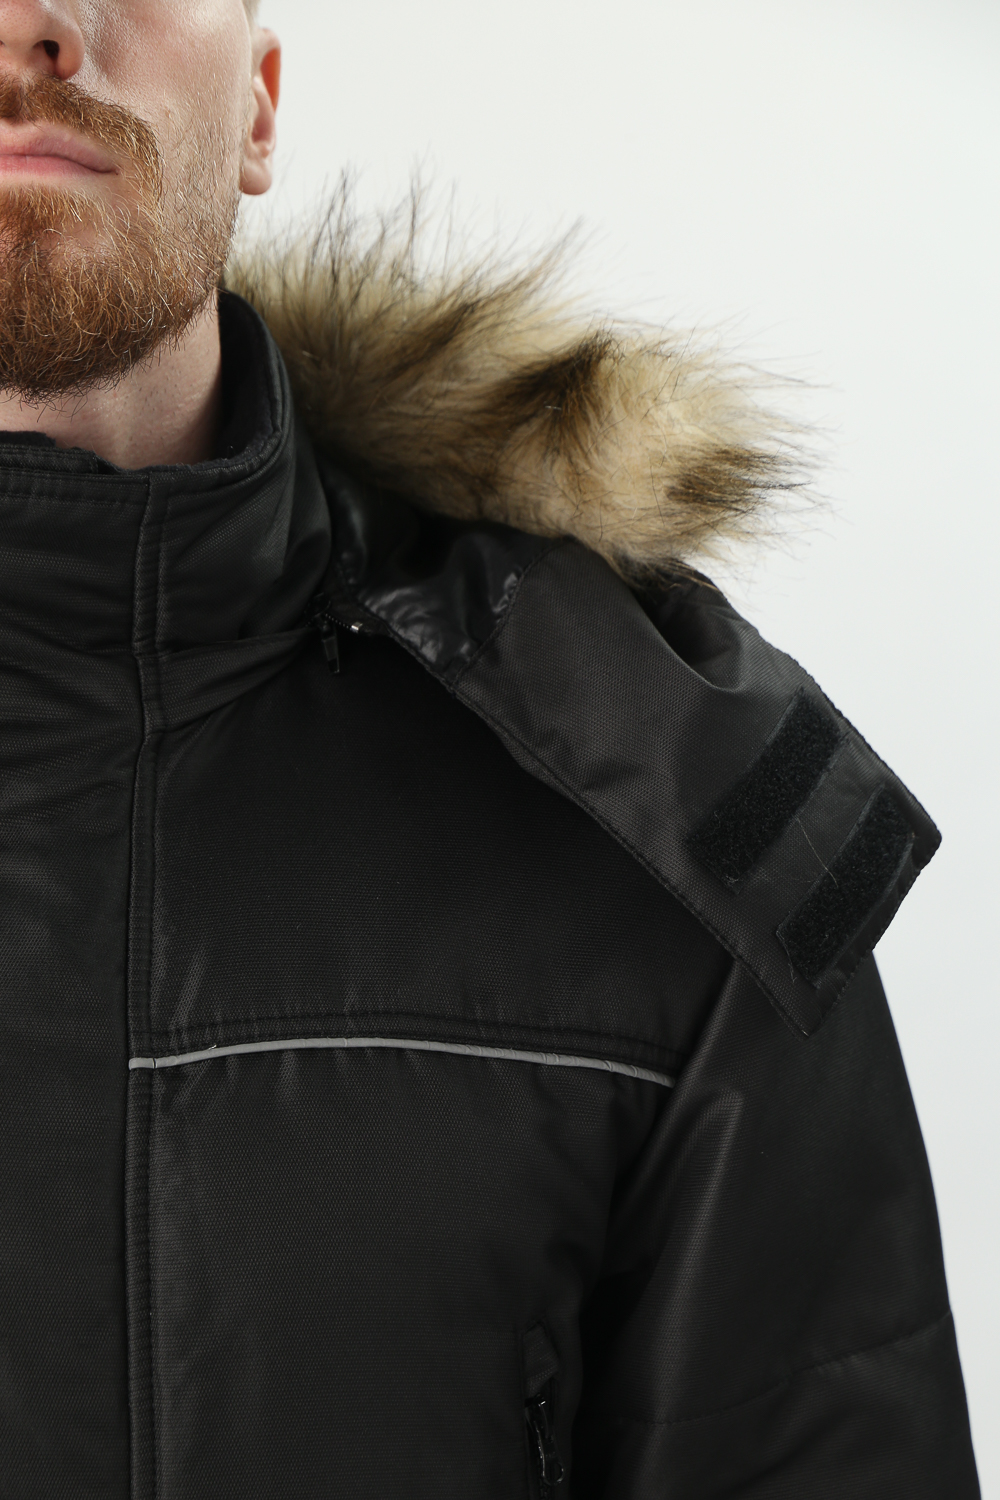 Куртка зимняя Аляска-Люкс (тк.Cat’s eye), черный